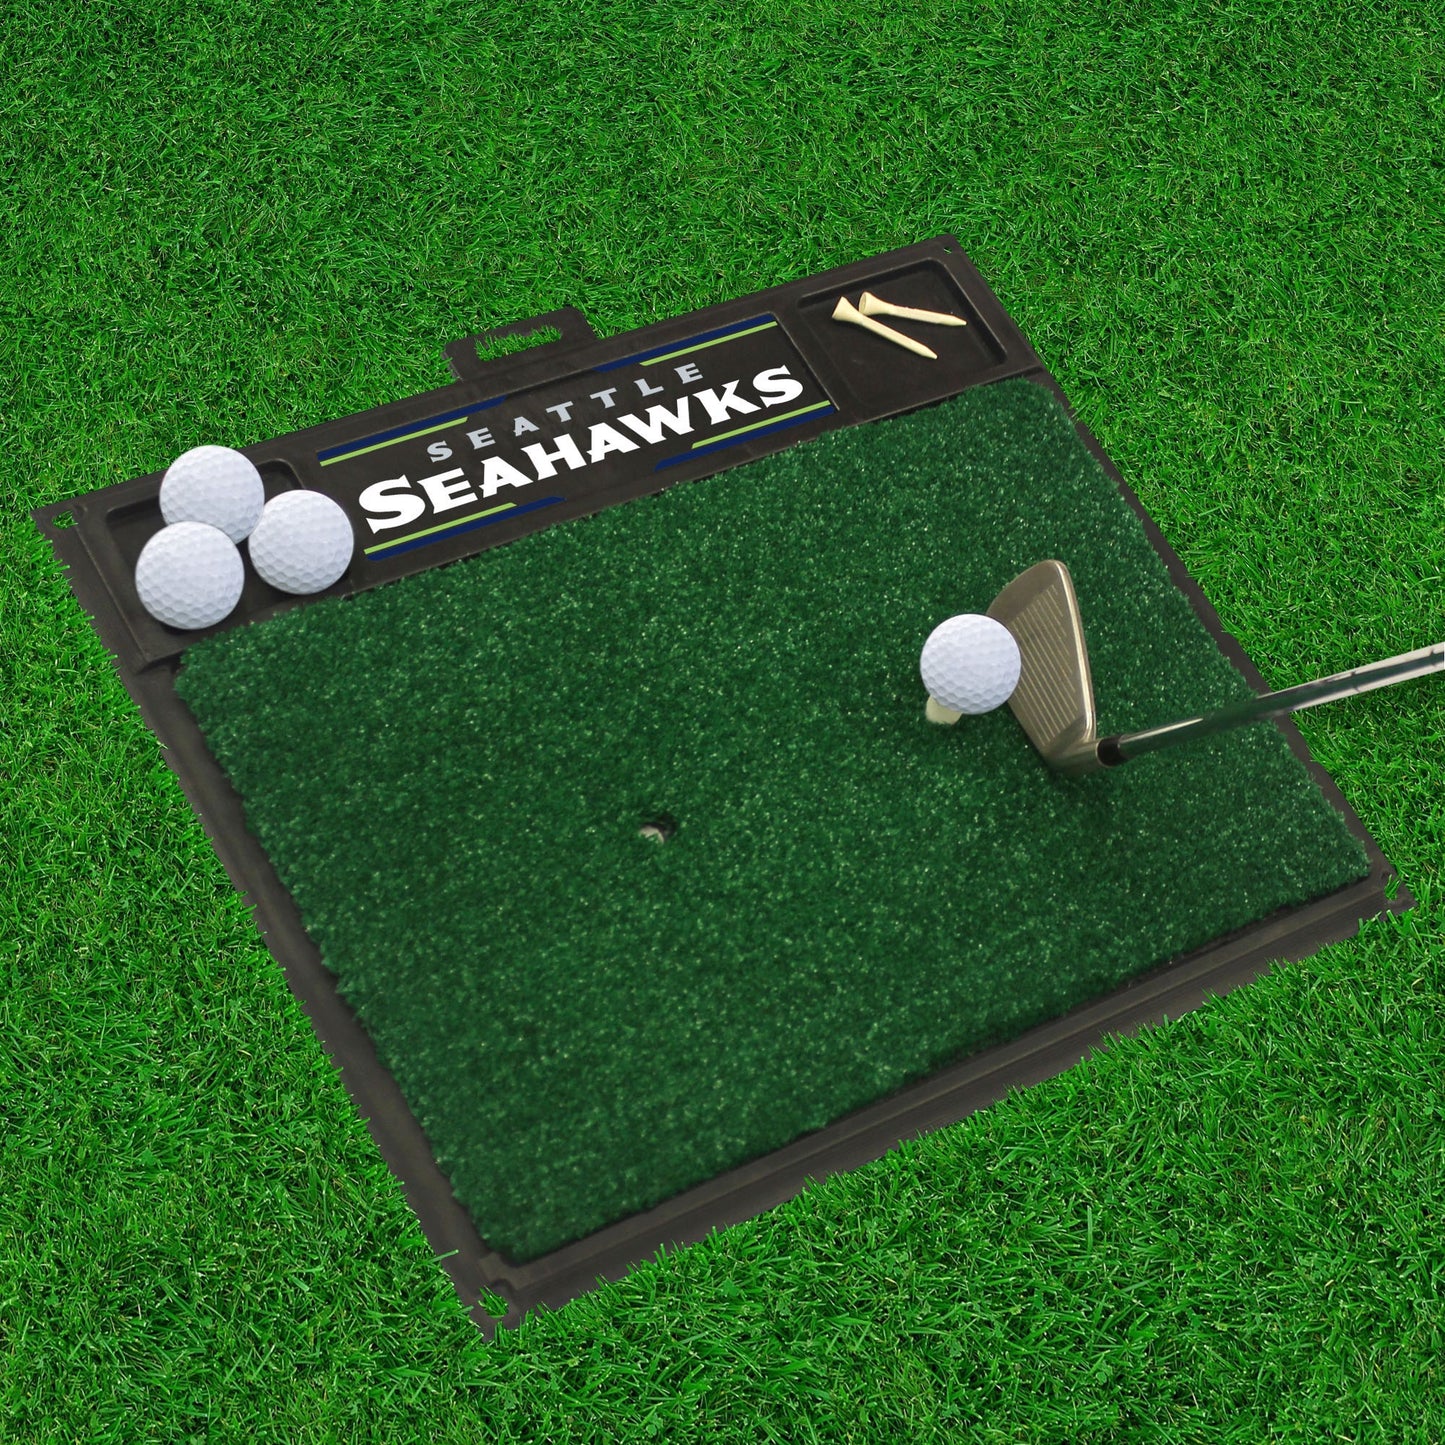 Seattle Seahawks Golf Hitting Mat by Fanmats